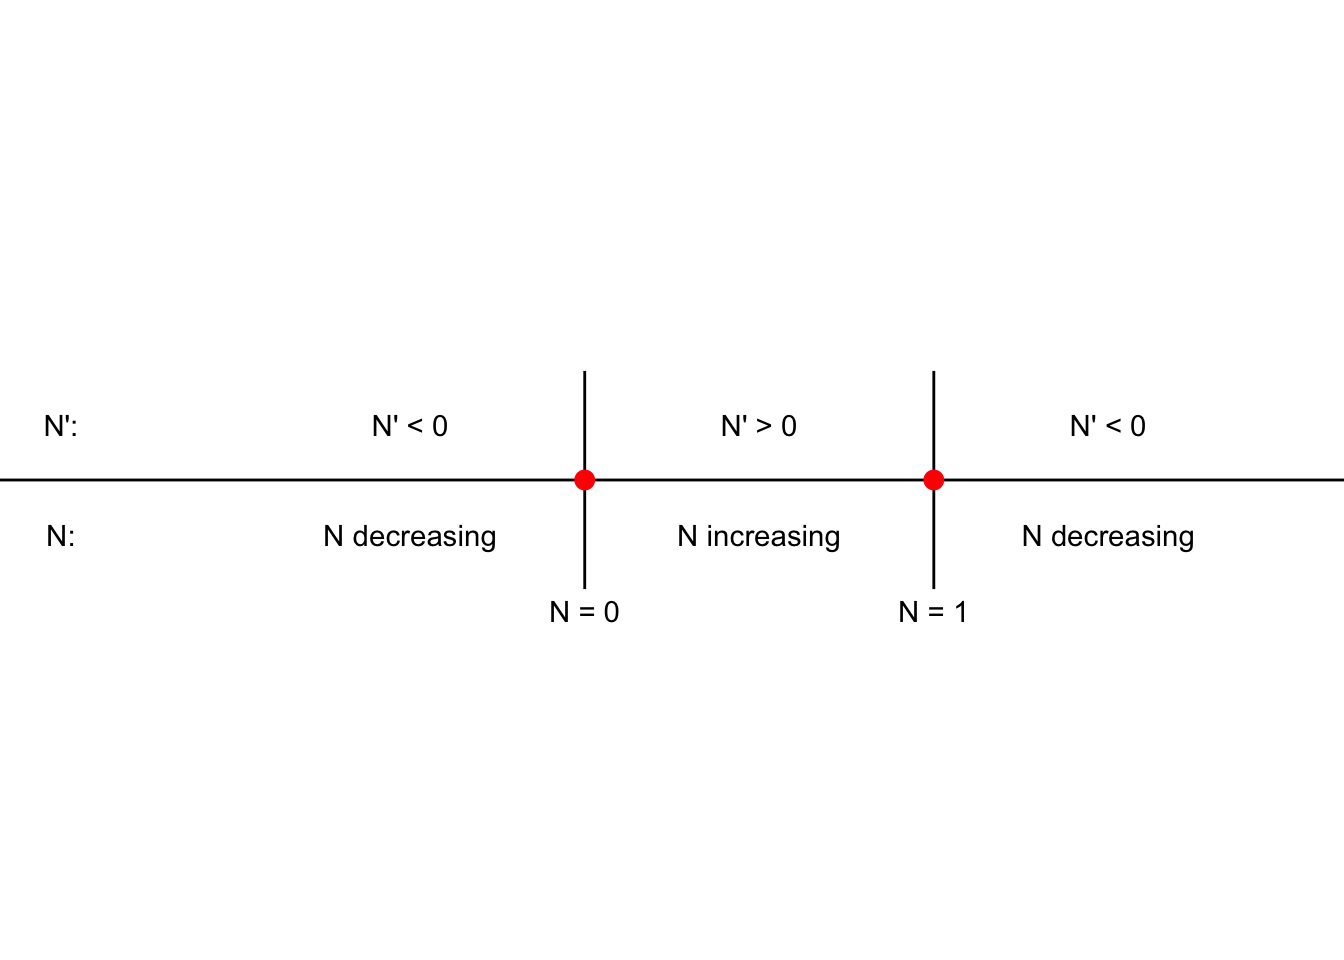 Phase line diagram for Equation \@ref(eq:logistic-05).